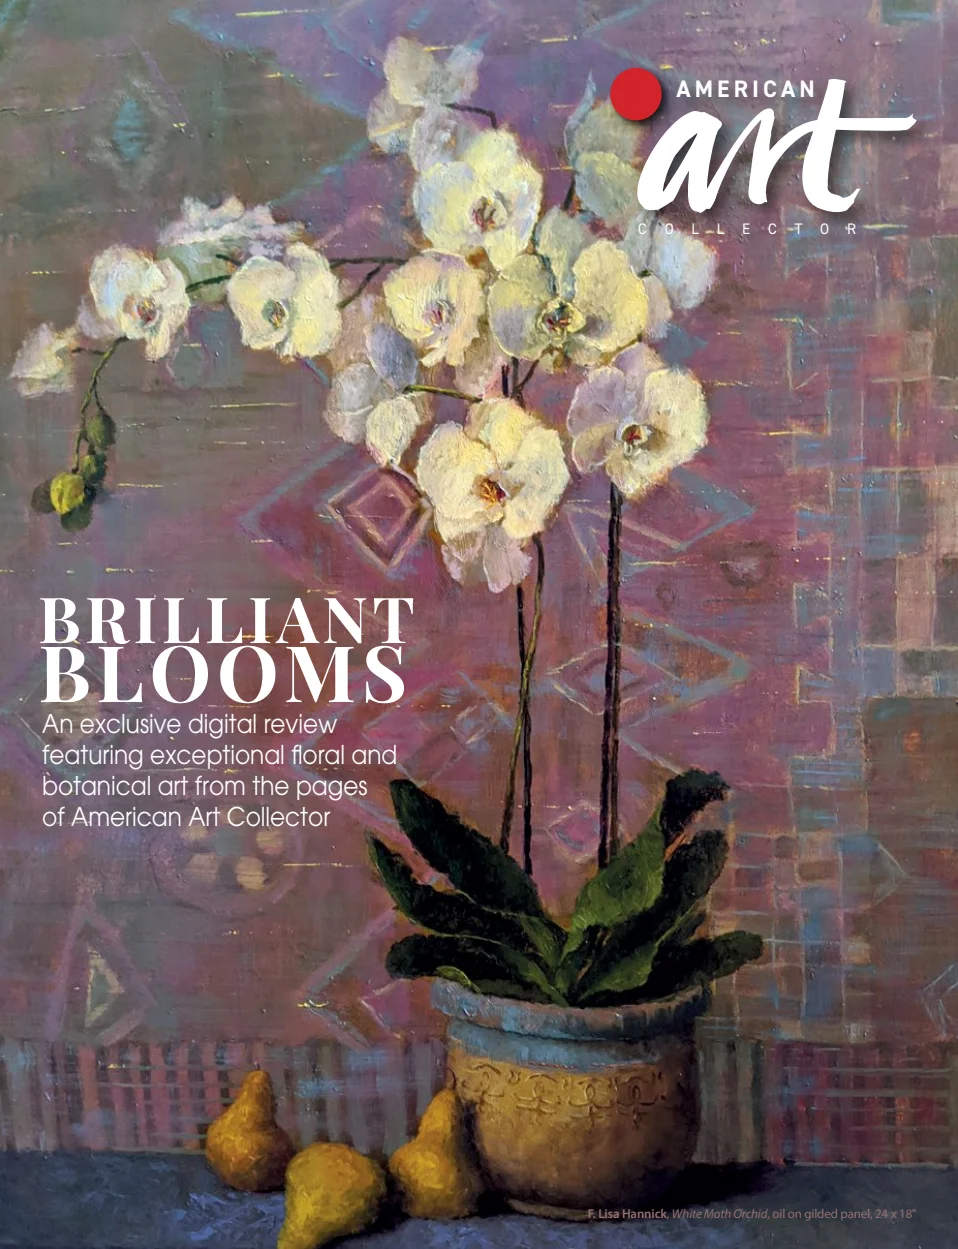 American Art Collector - Brilliant Blooms